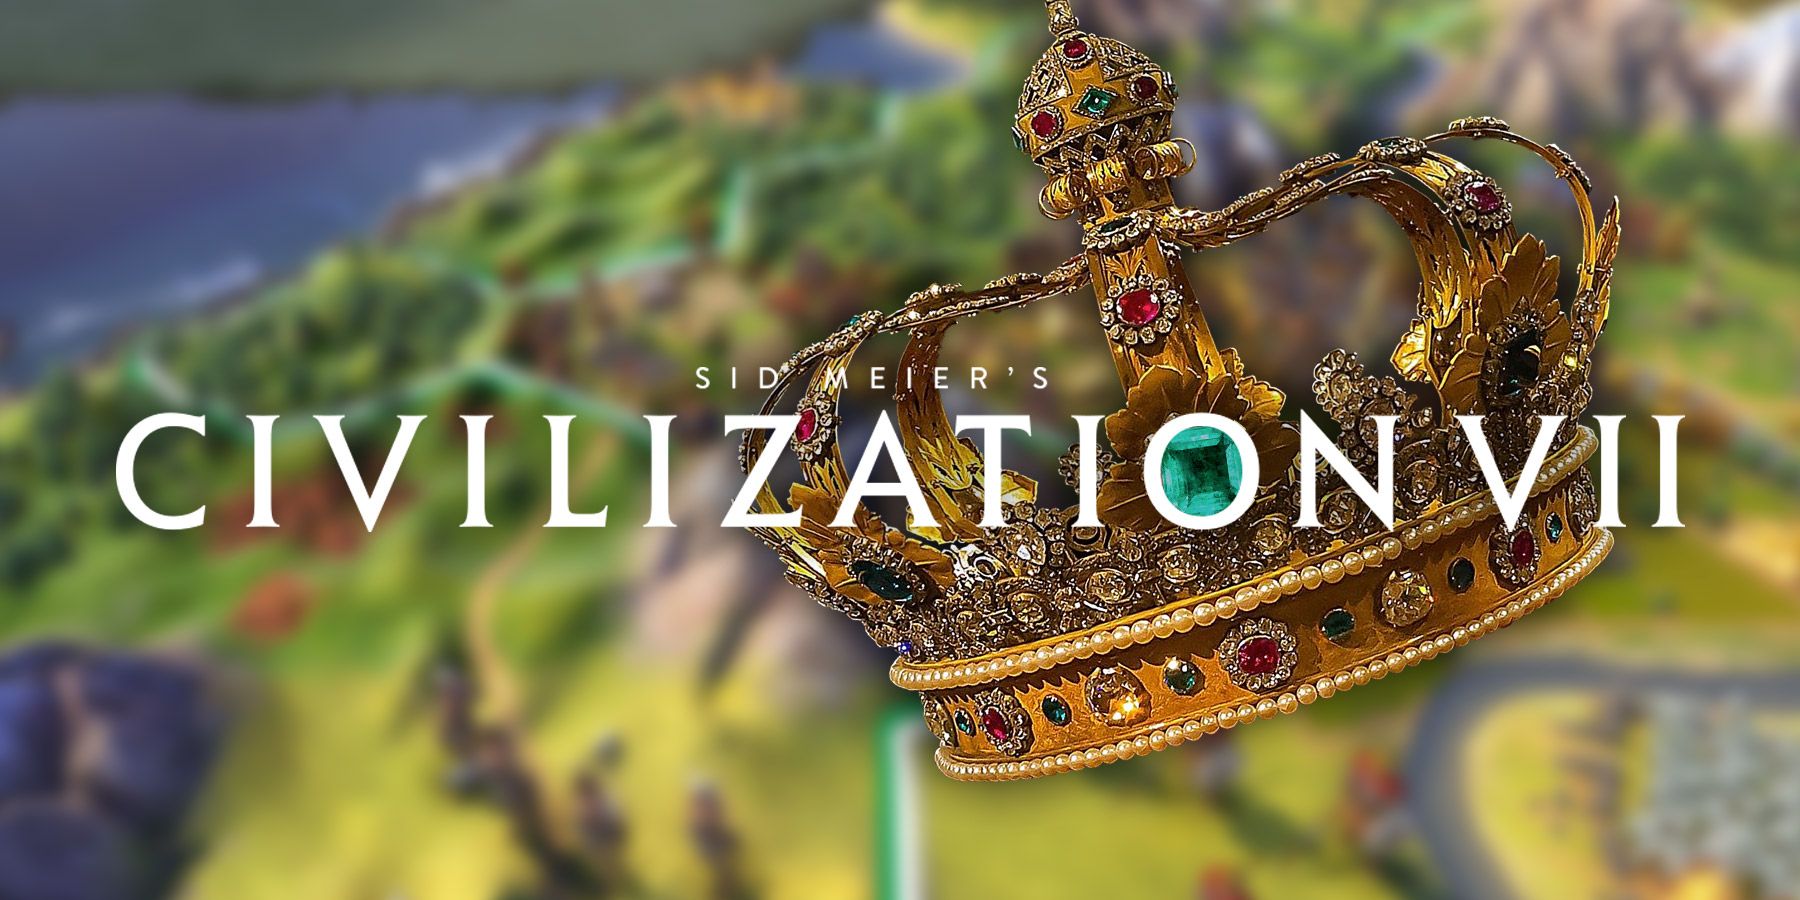 Civilization 7 Crown Jewel